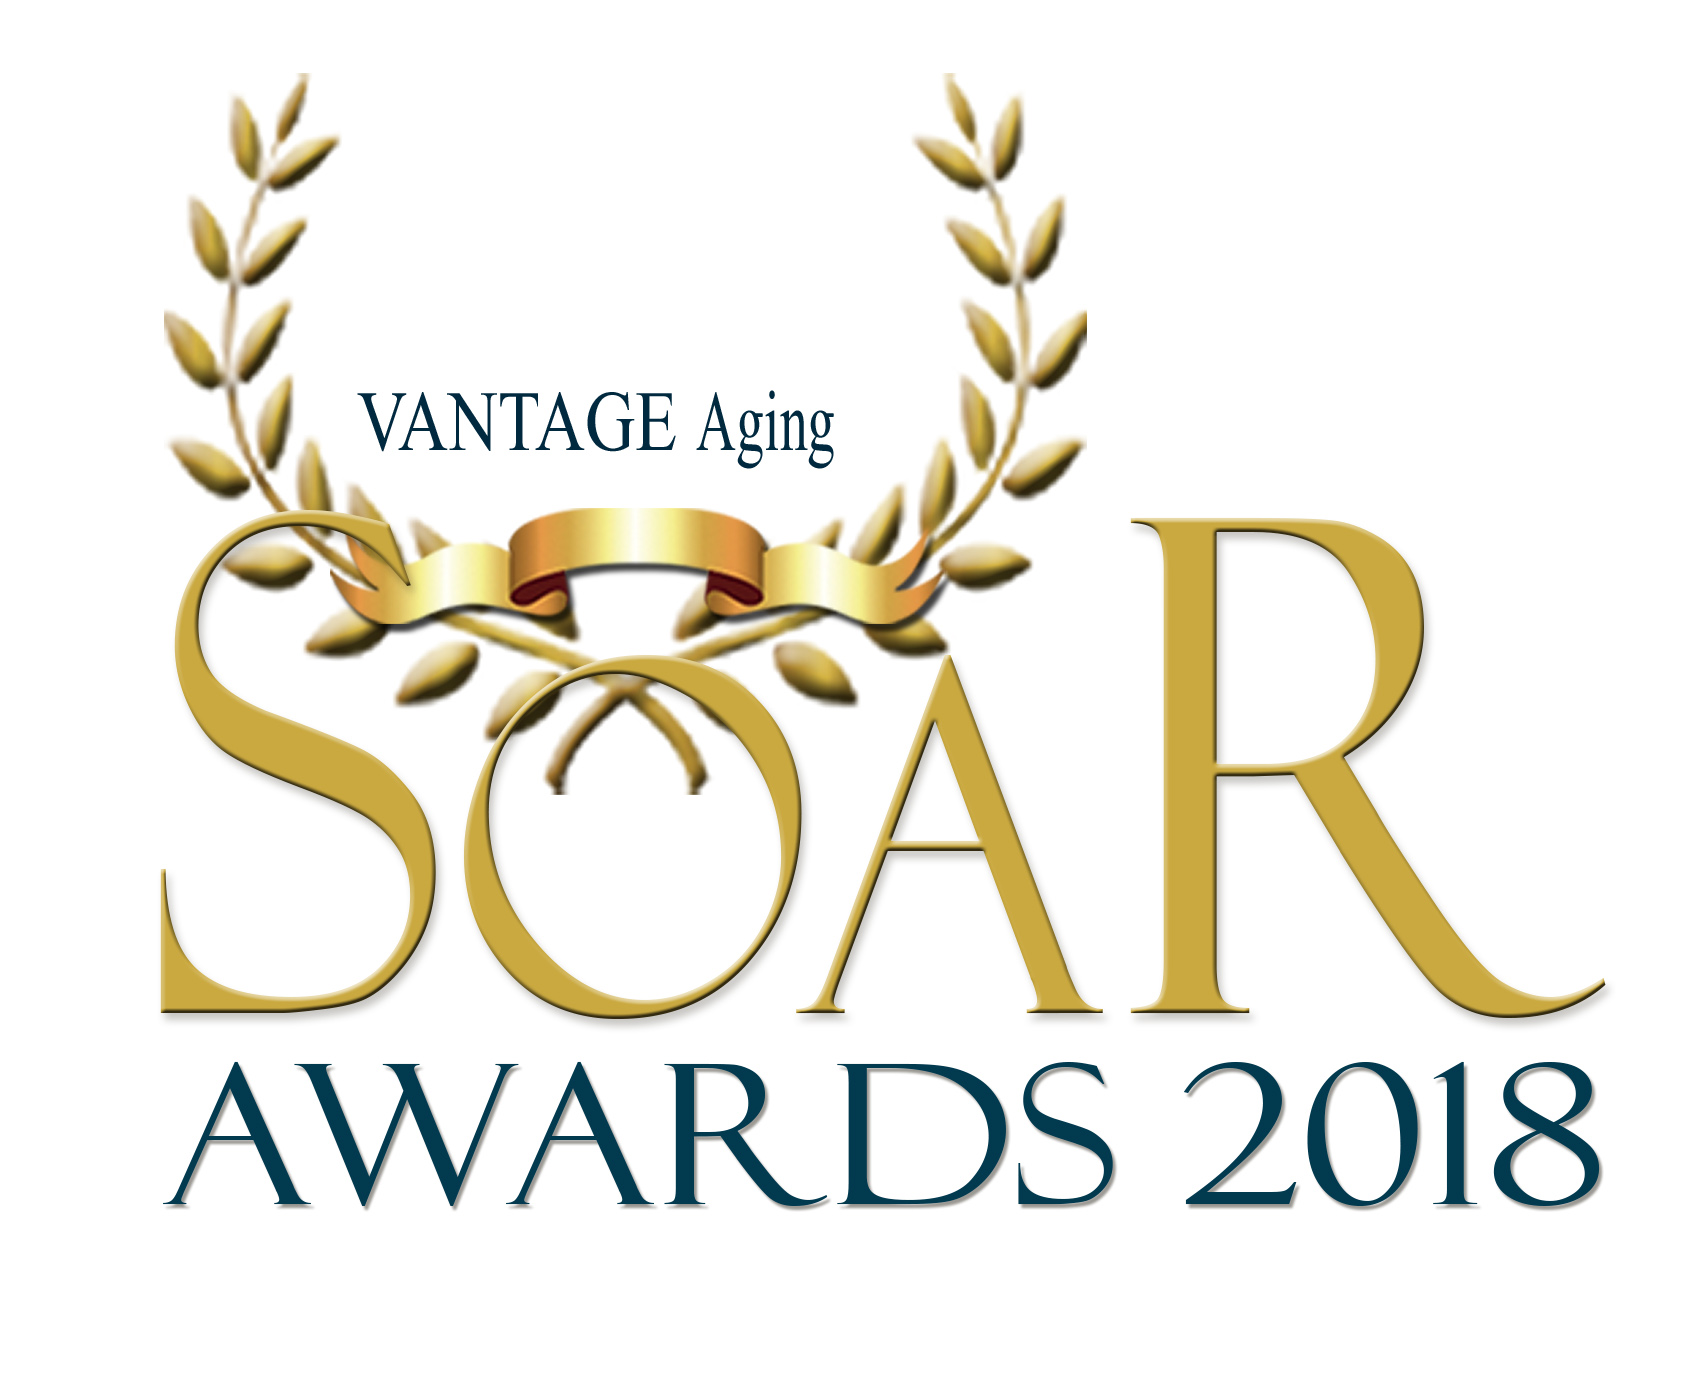 VANTAGE Aging SOAR Awards 2018 logo